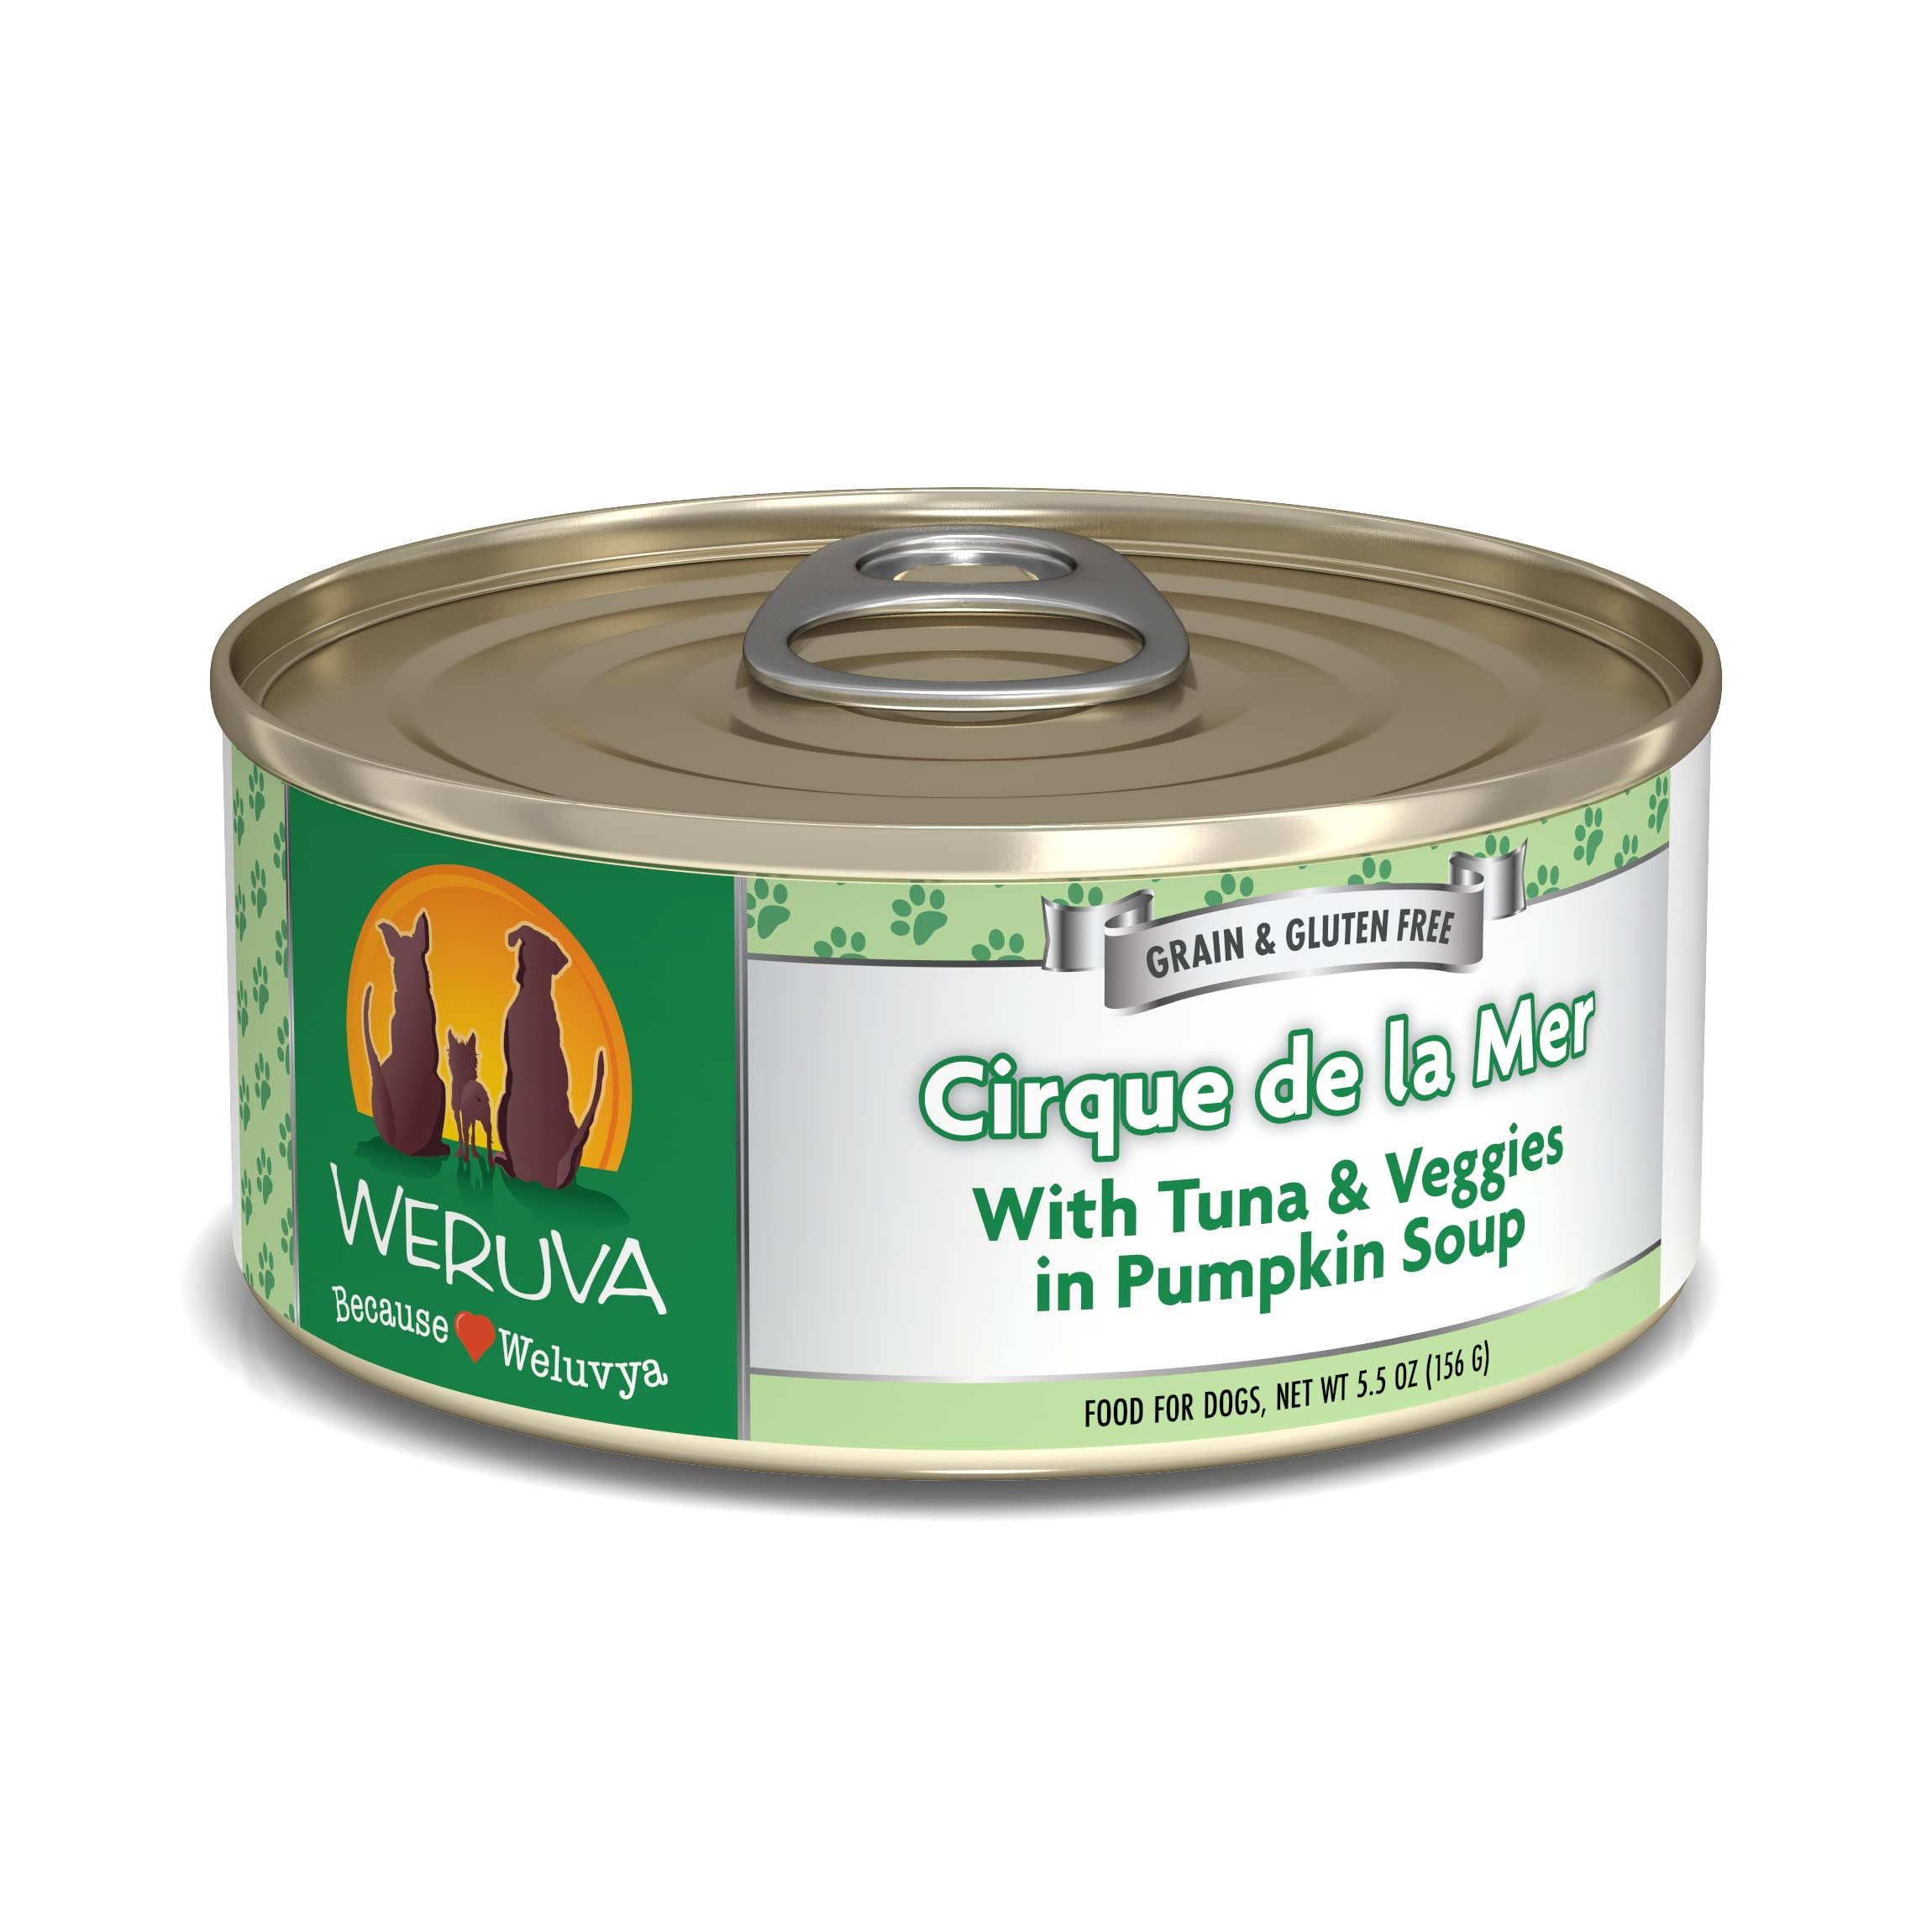 Weruva Grain-Free Cirque De La Mer Dog Food - Tuna & Veggies in Pumpkin Soup, 5.5oz